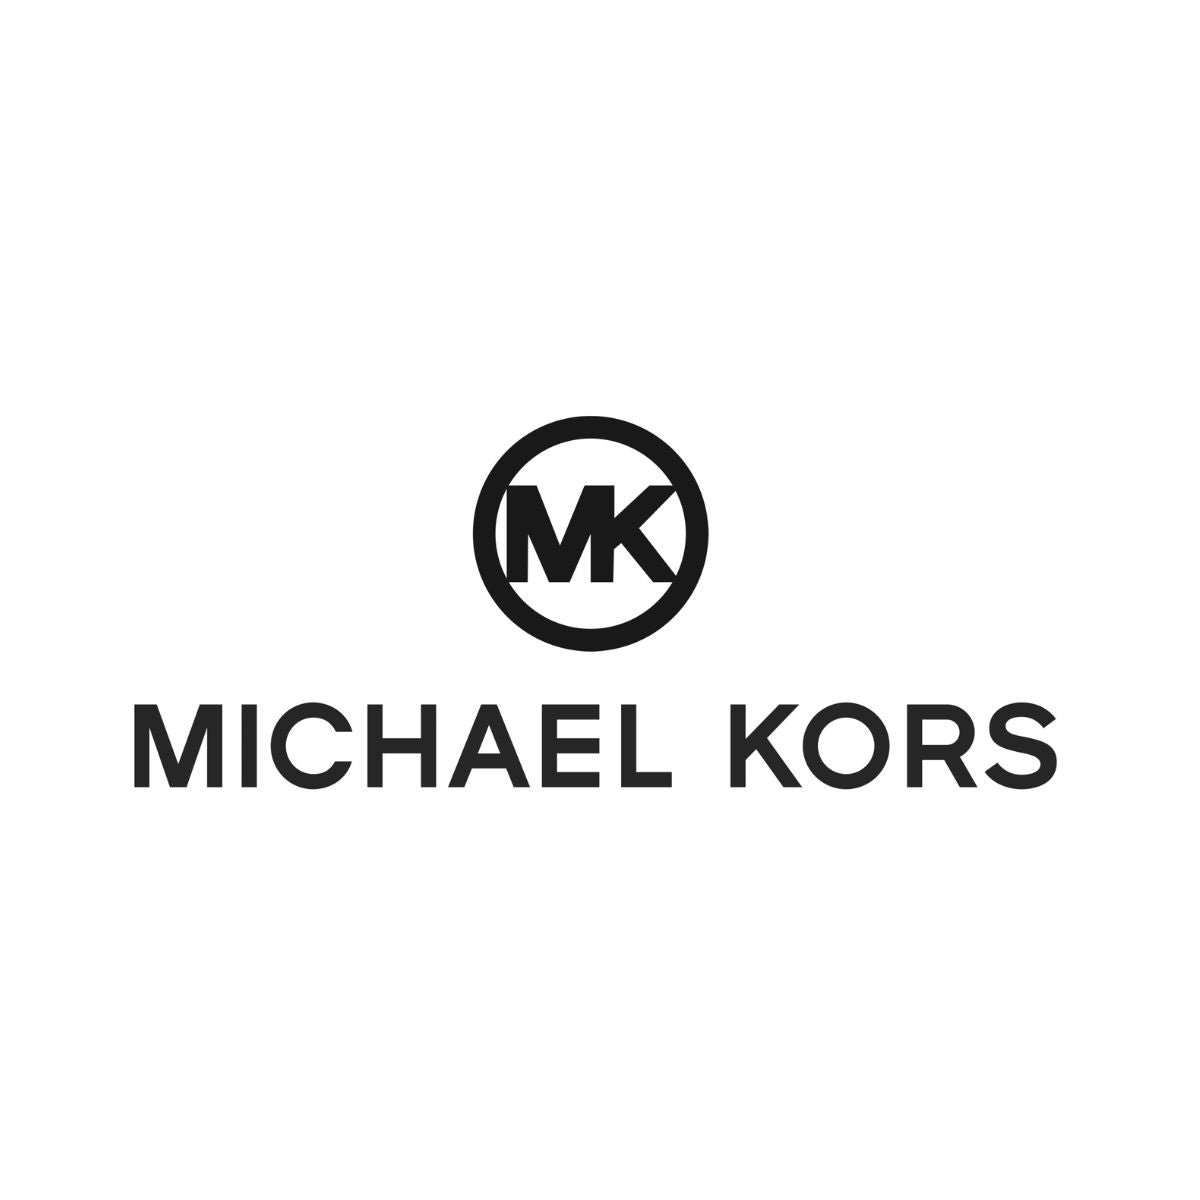 "Michael kors Luxury eyewear brands sunglasses & optical frames and lenses at optorium"